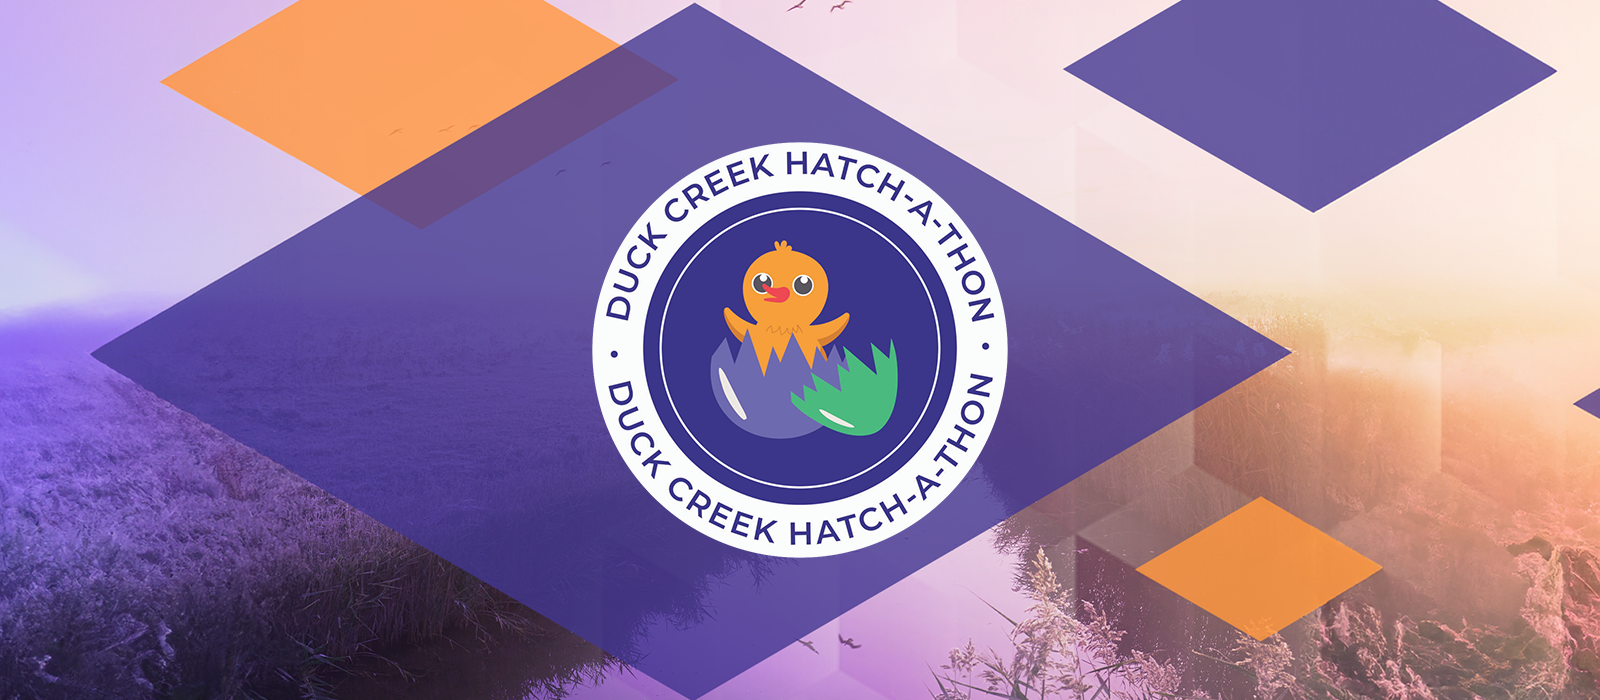 Duck Creek Hatch-a-thon event logo